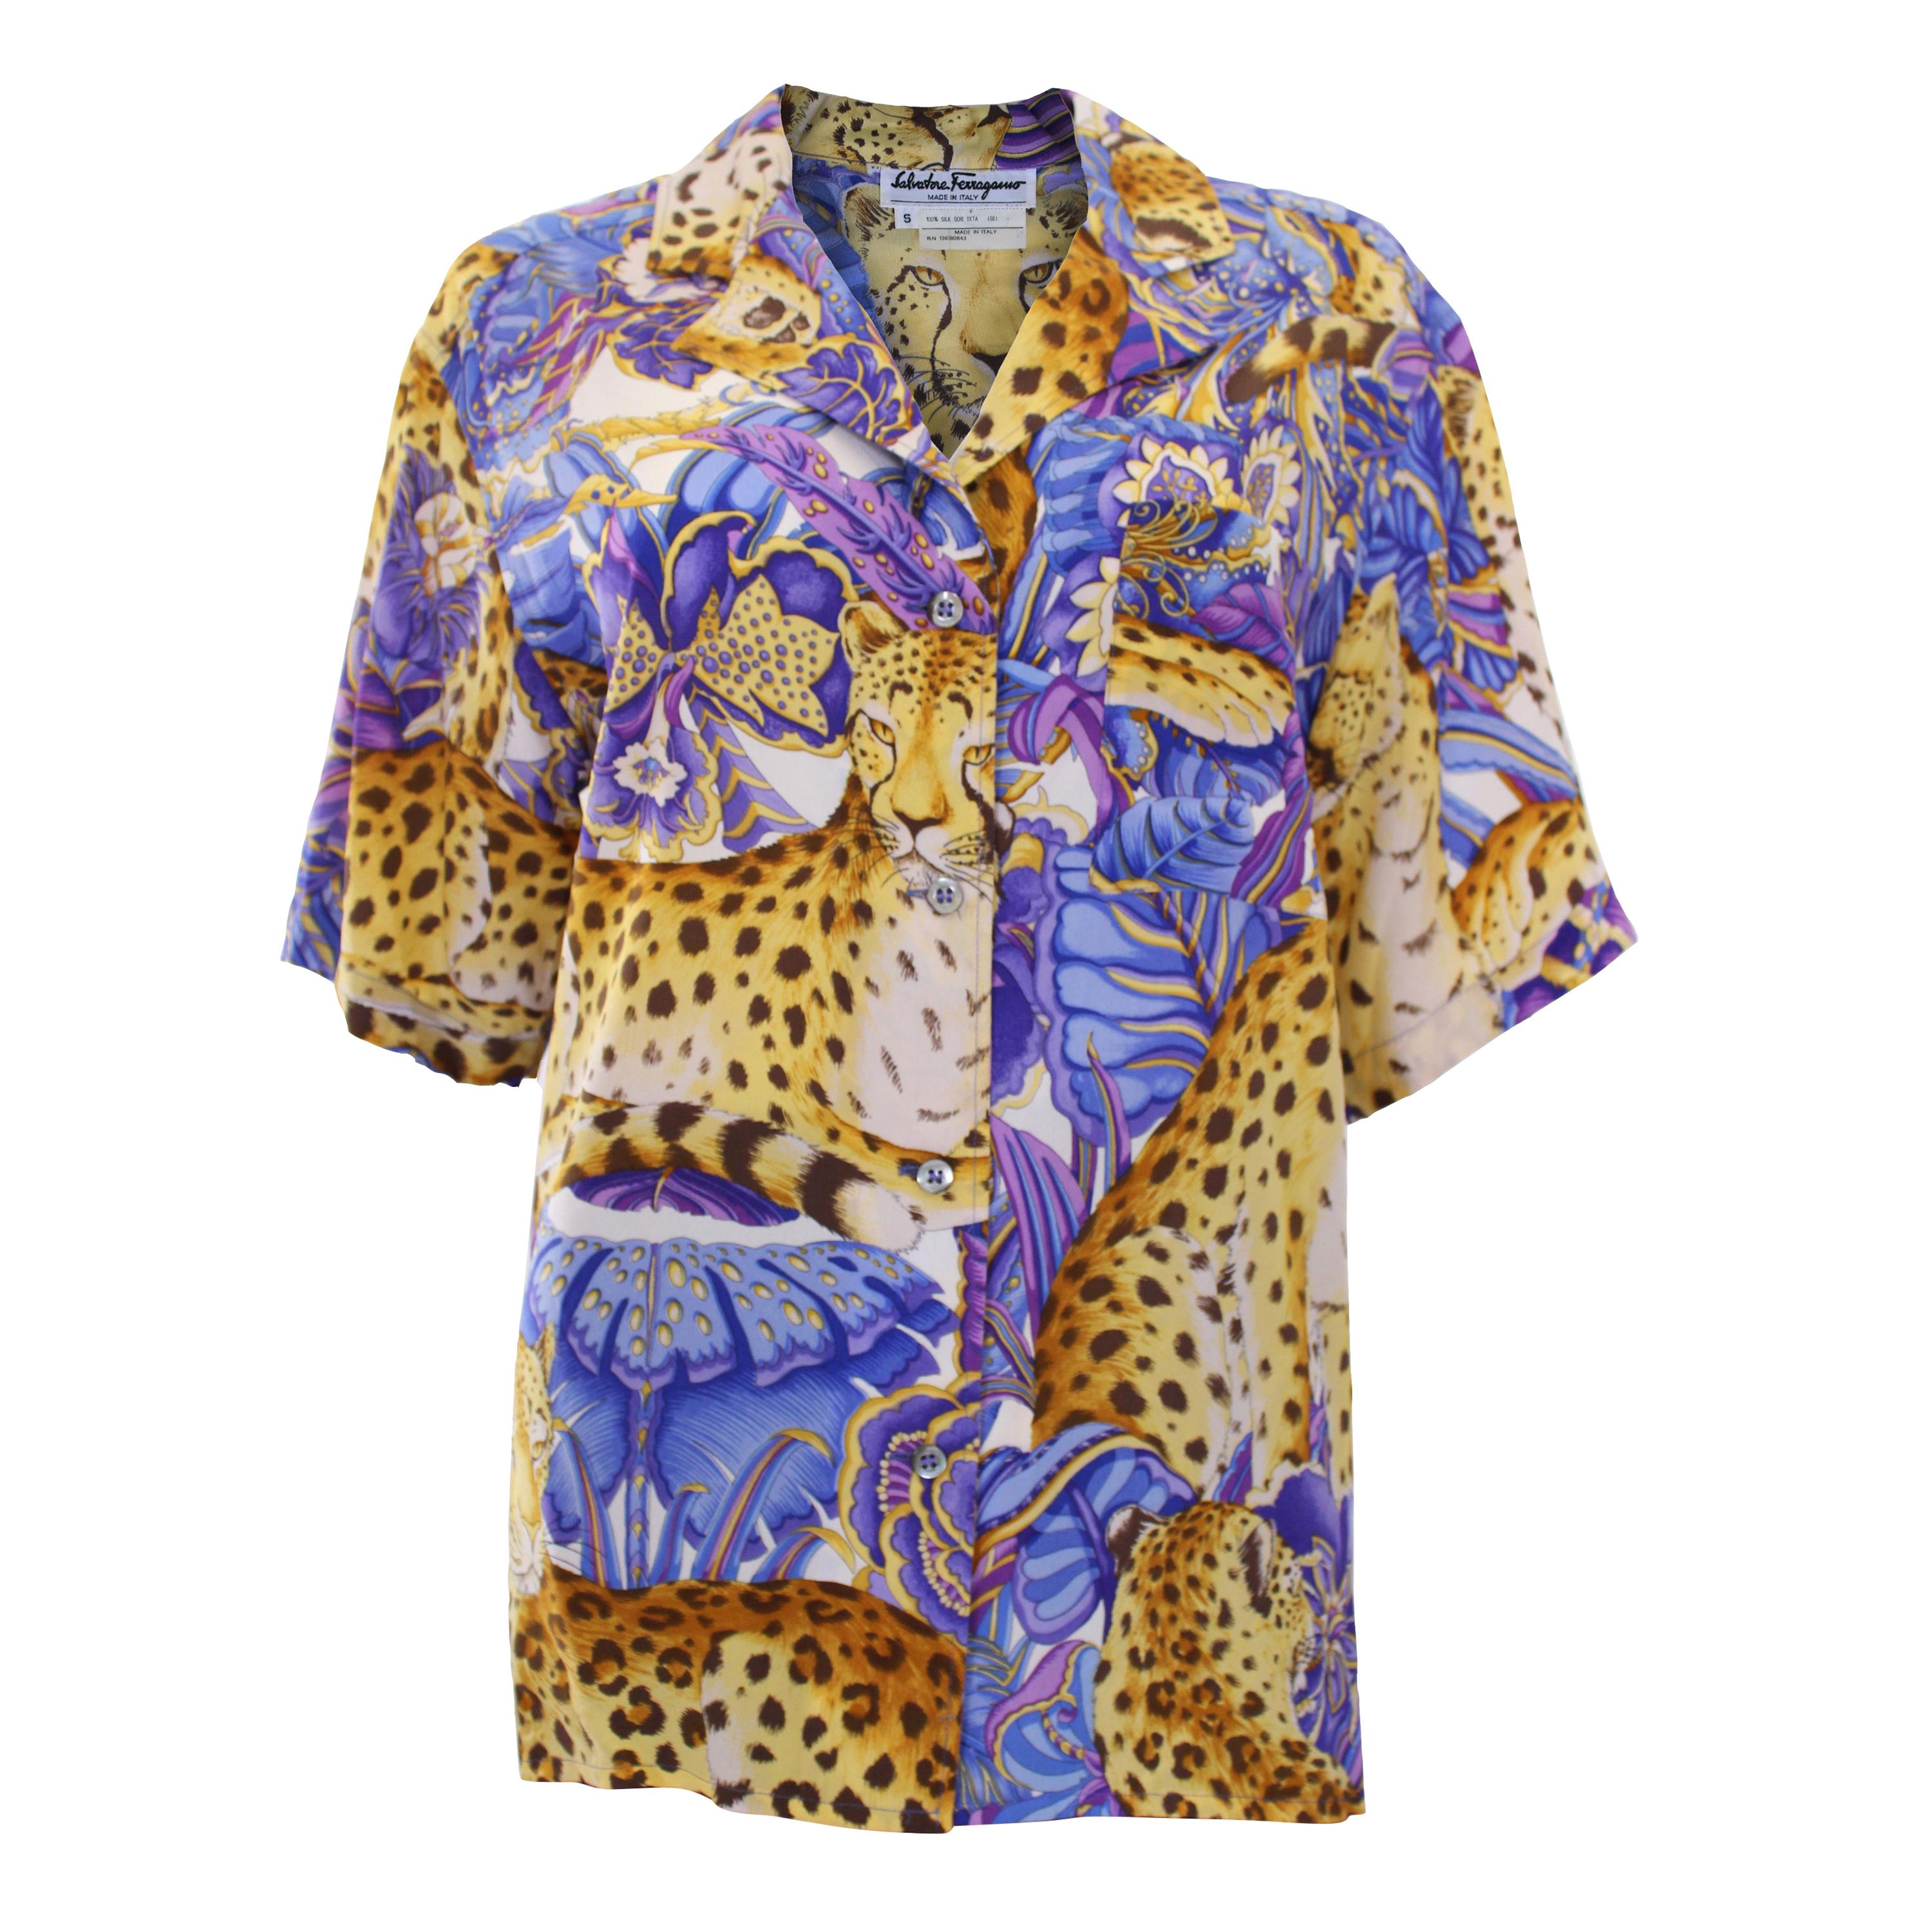 A vintage 1980s Salvatore Ferragamo Short sleeved silk shirt 